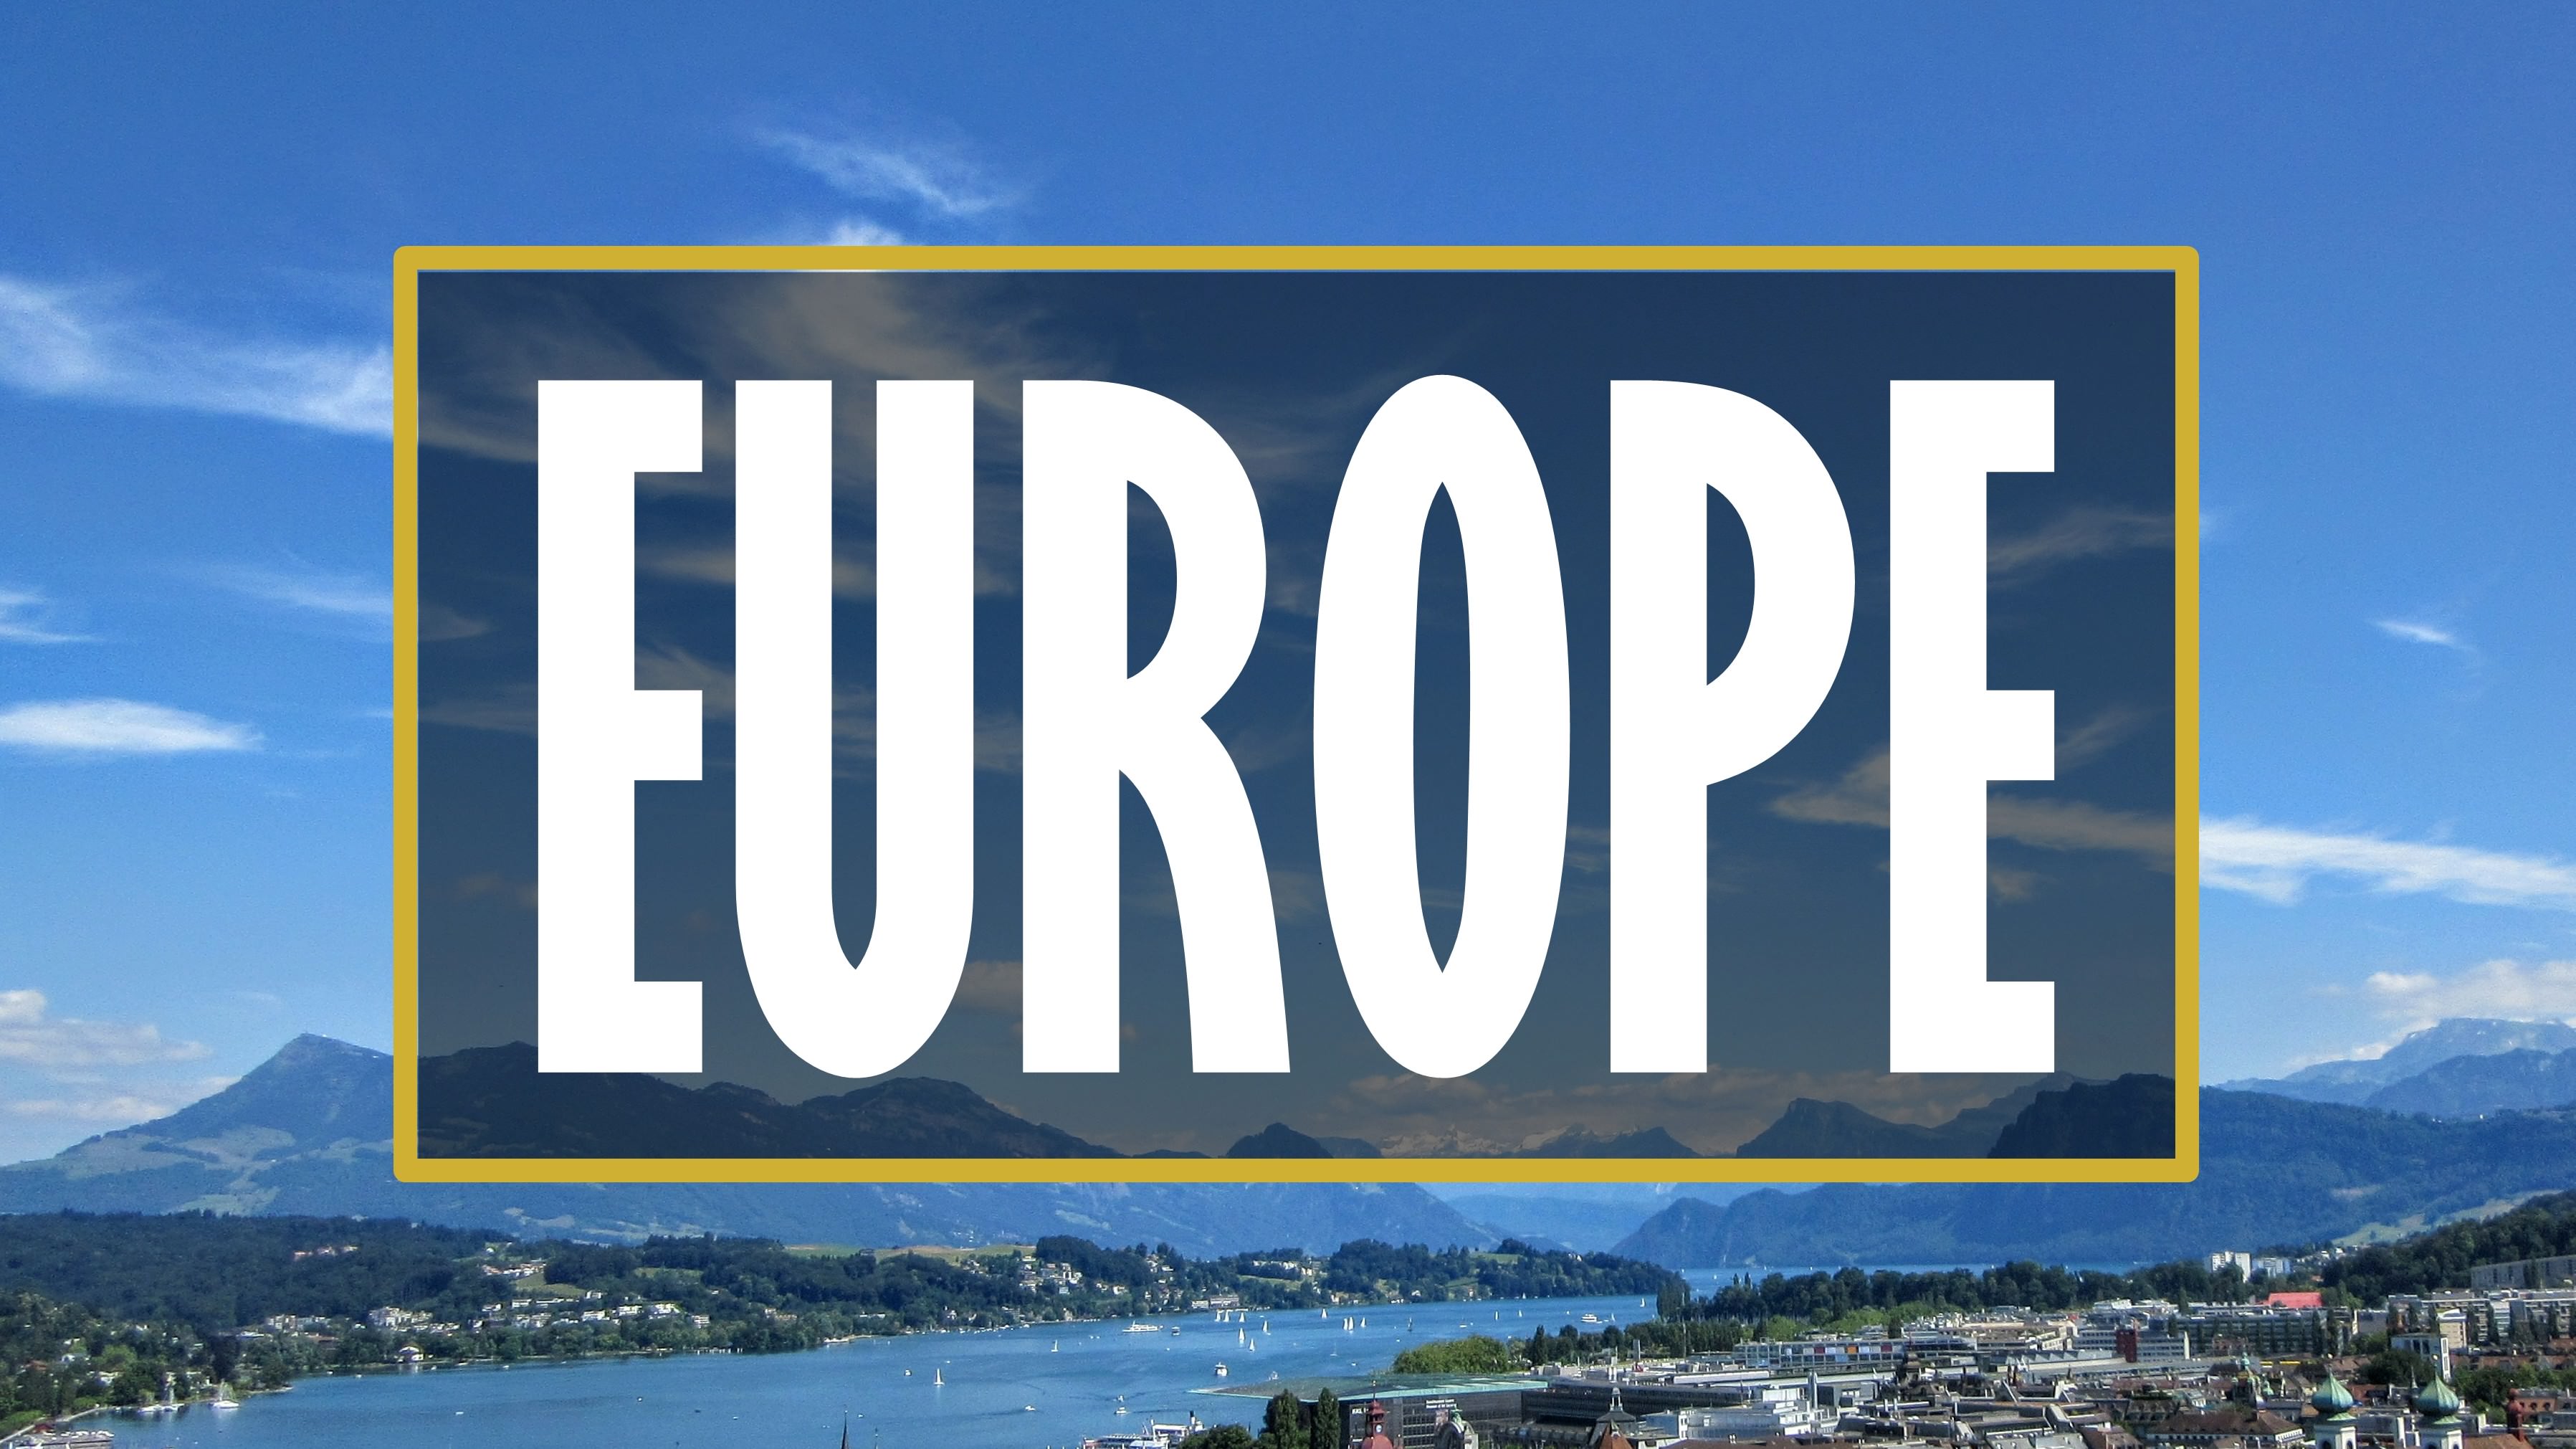 Europe Travel Category | My Meena Life